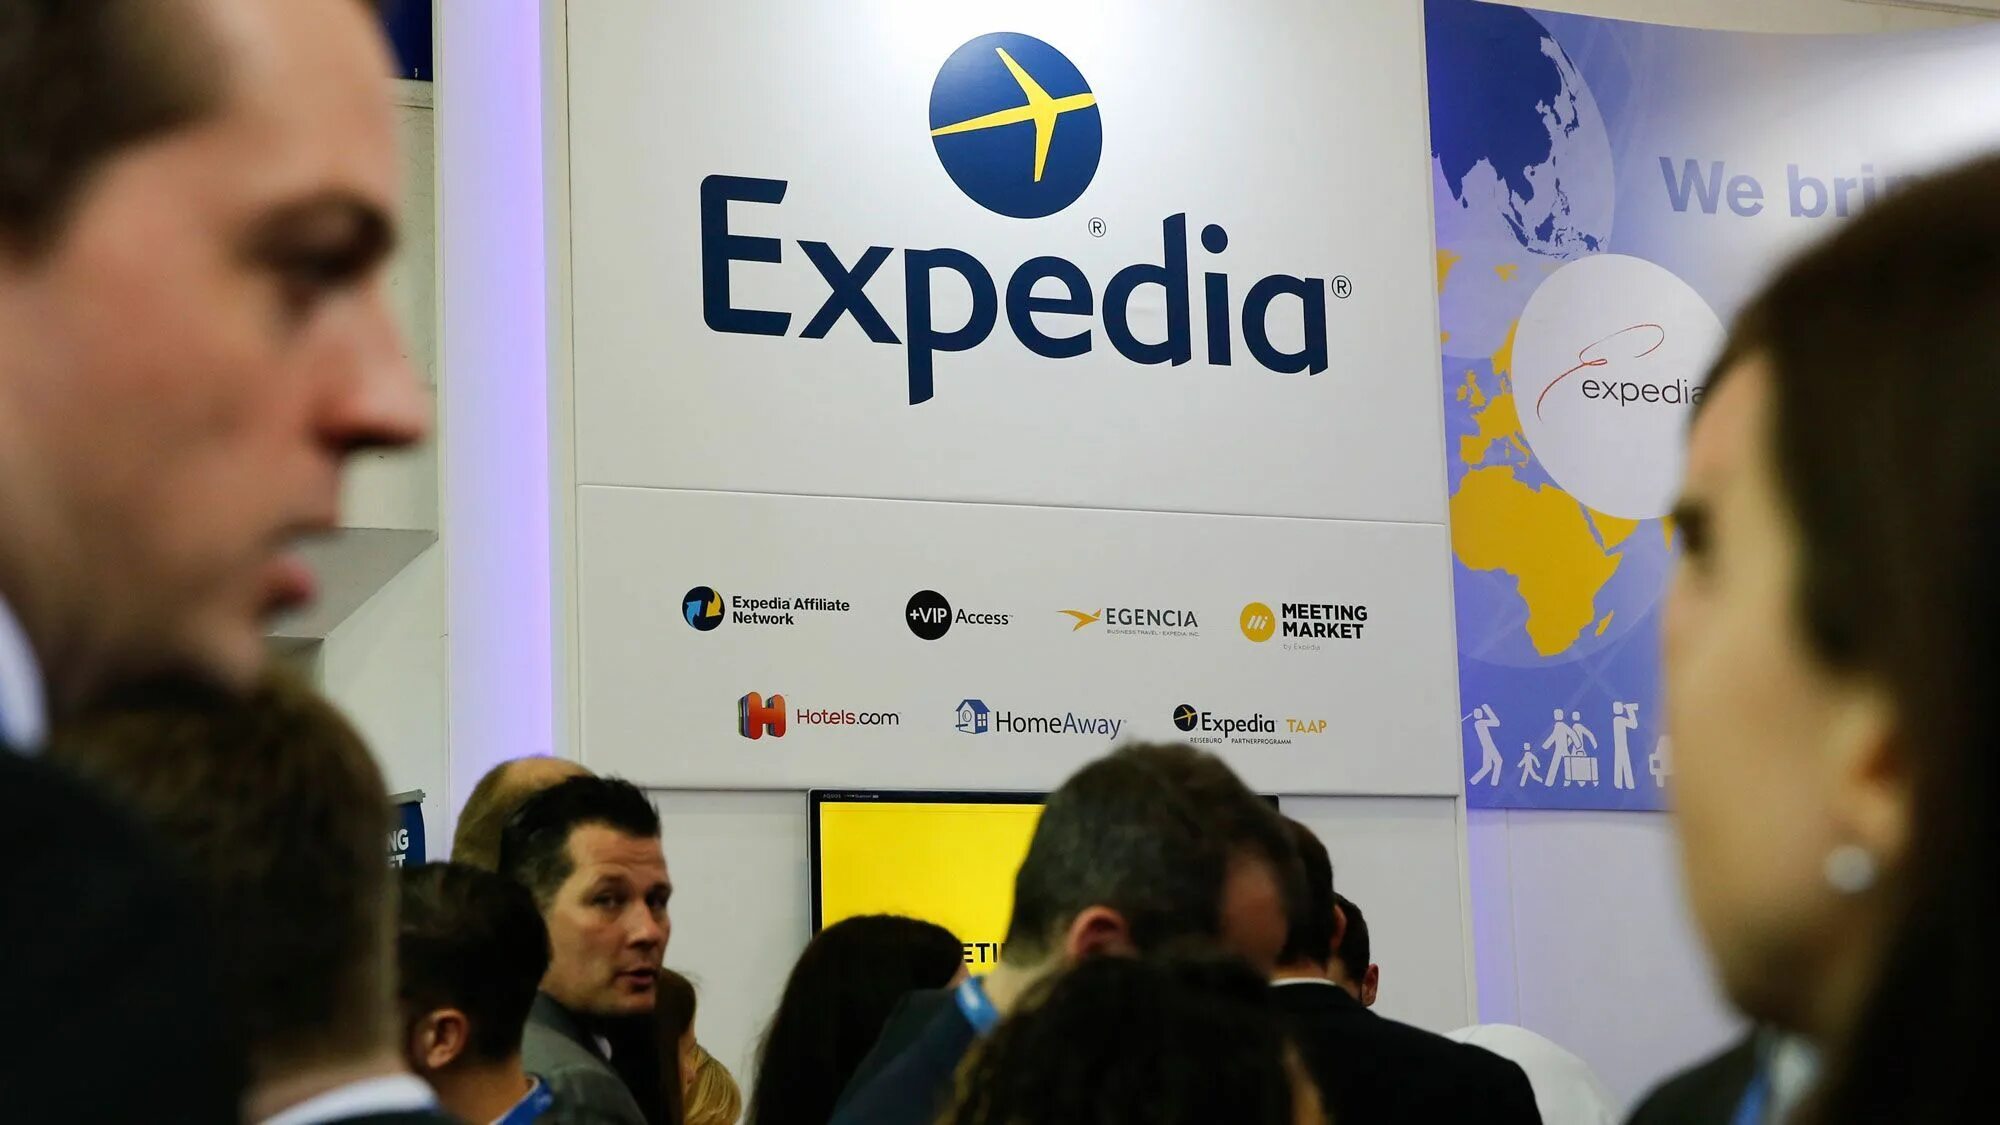 Meet market отзывы. Expedia. Expedia Group. Expedia чья компания. Expedia Group logo.